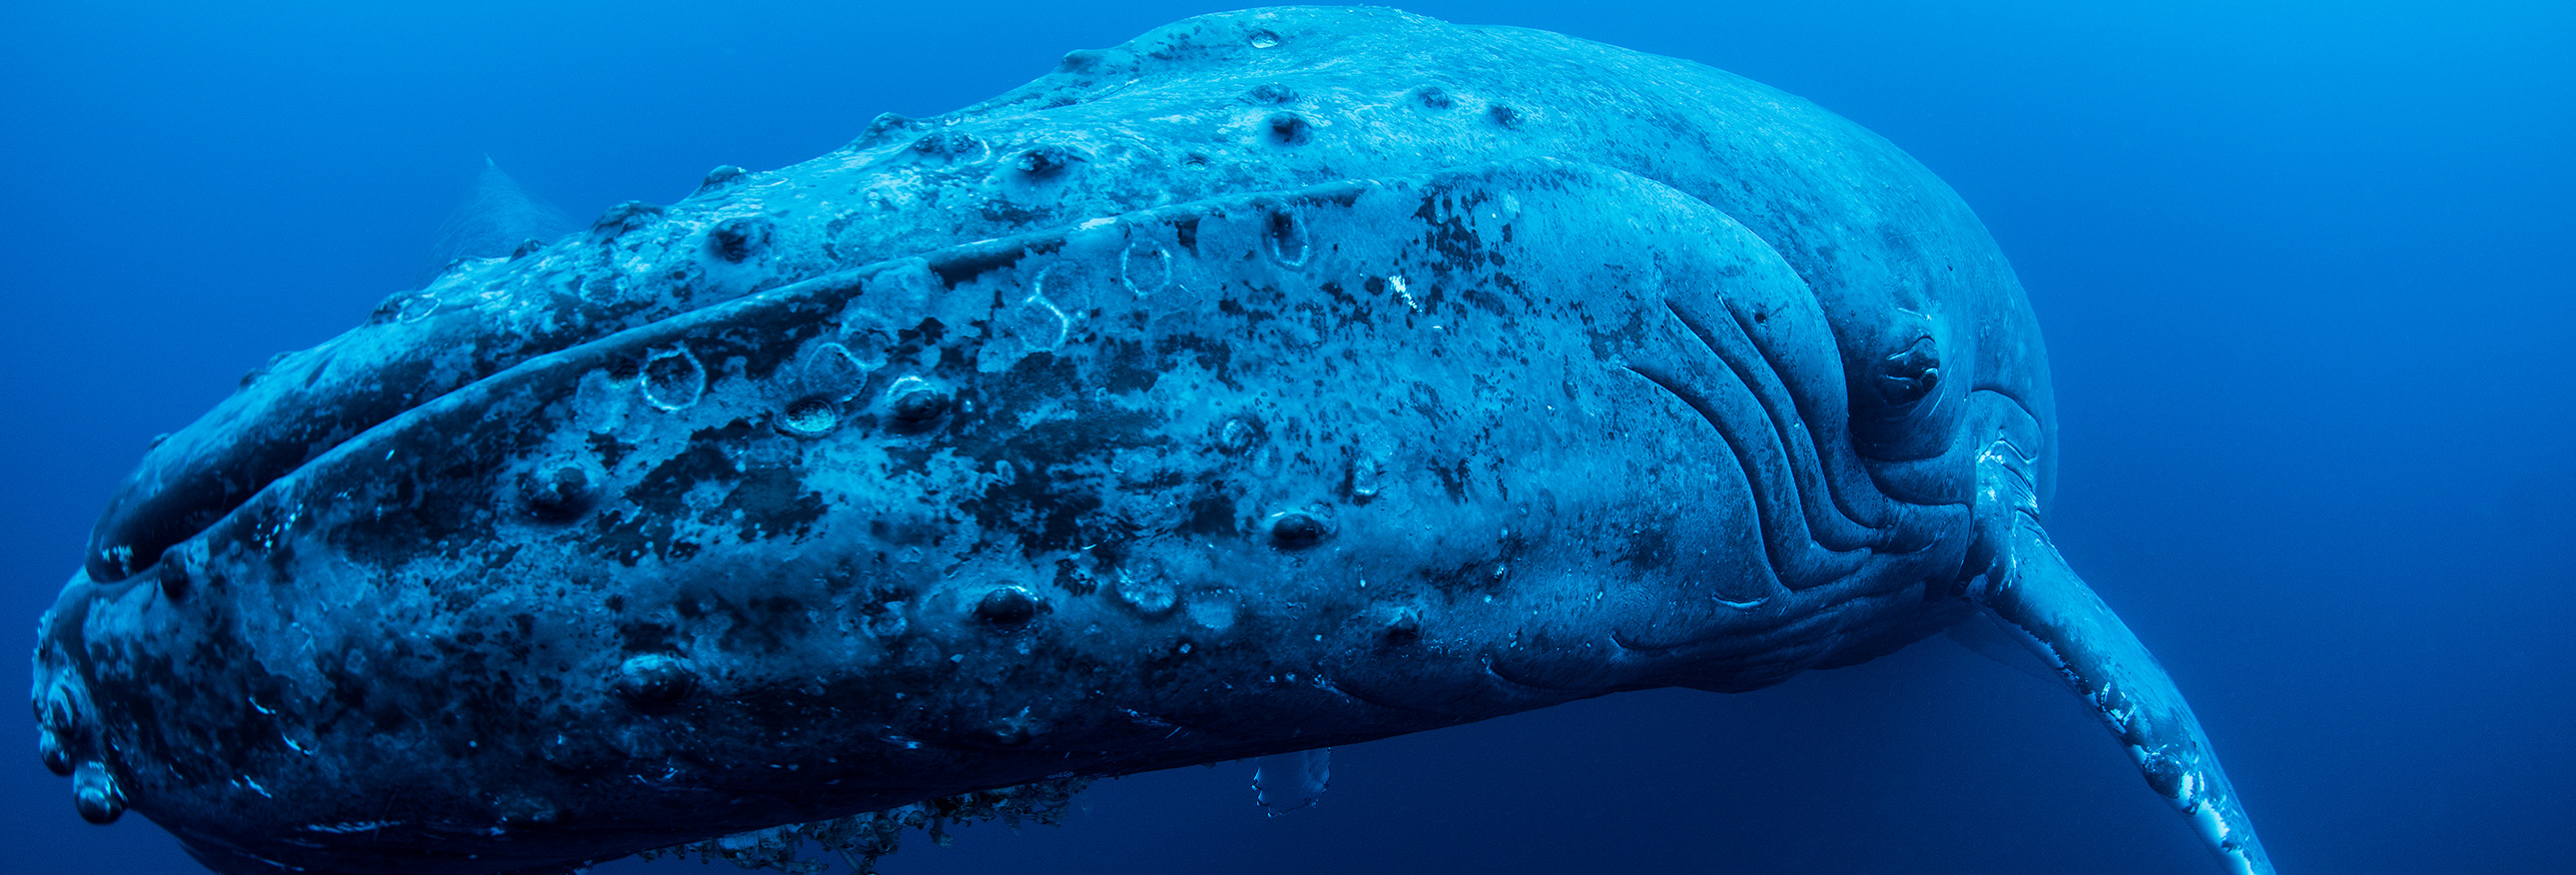 a humpback whale off the coast of Mexico